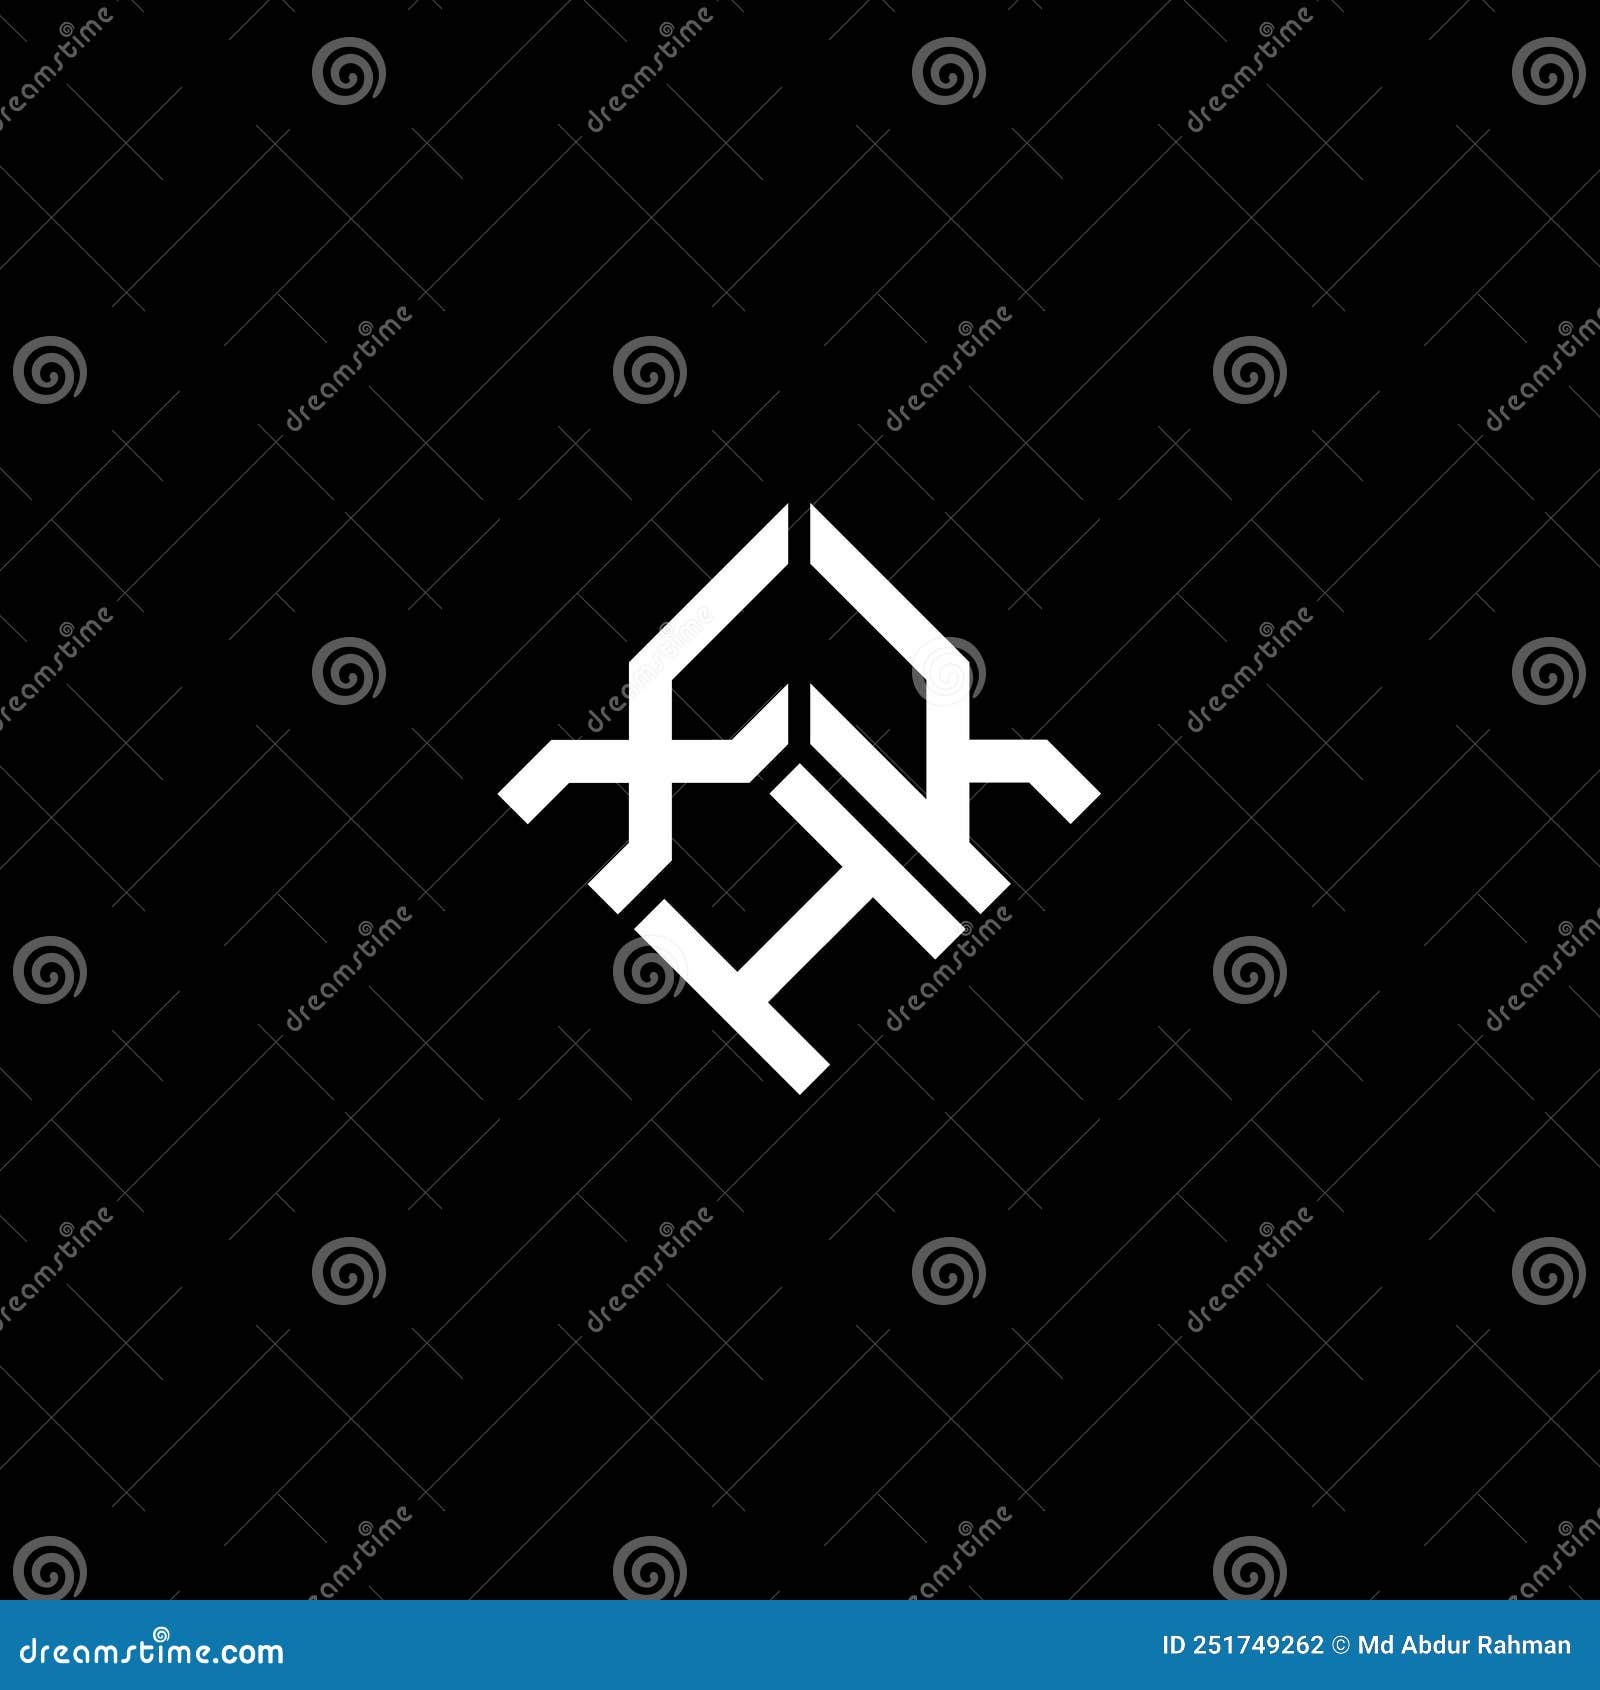 XKH Letter Logo Design on Black Background. XKH Creative Initials ...